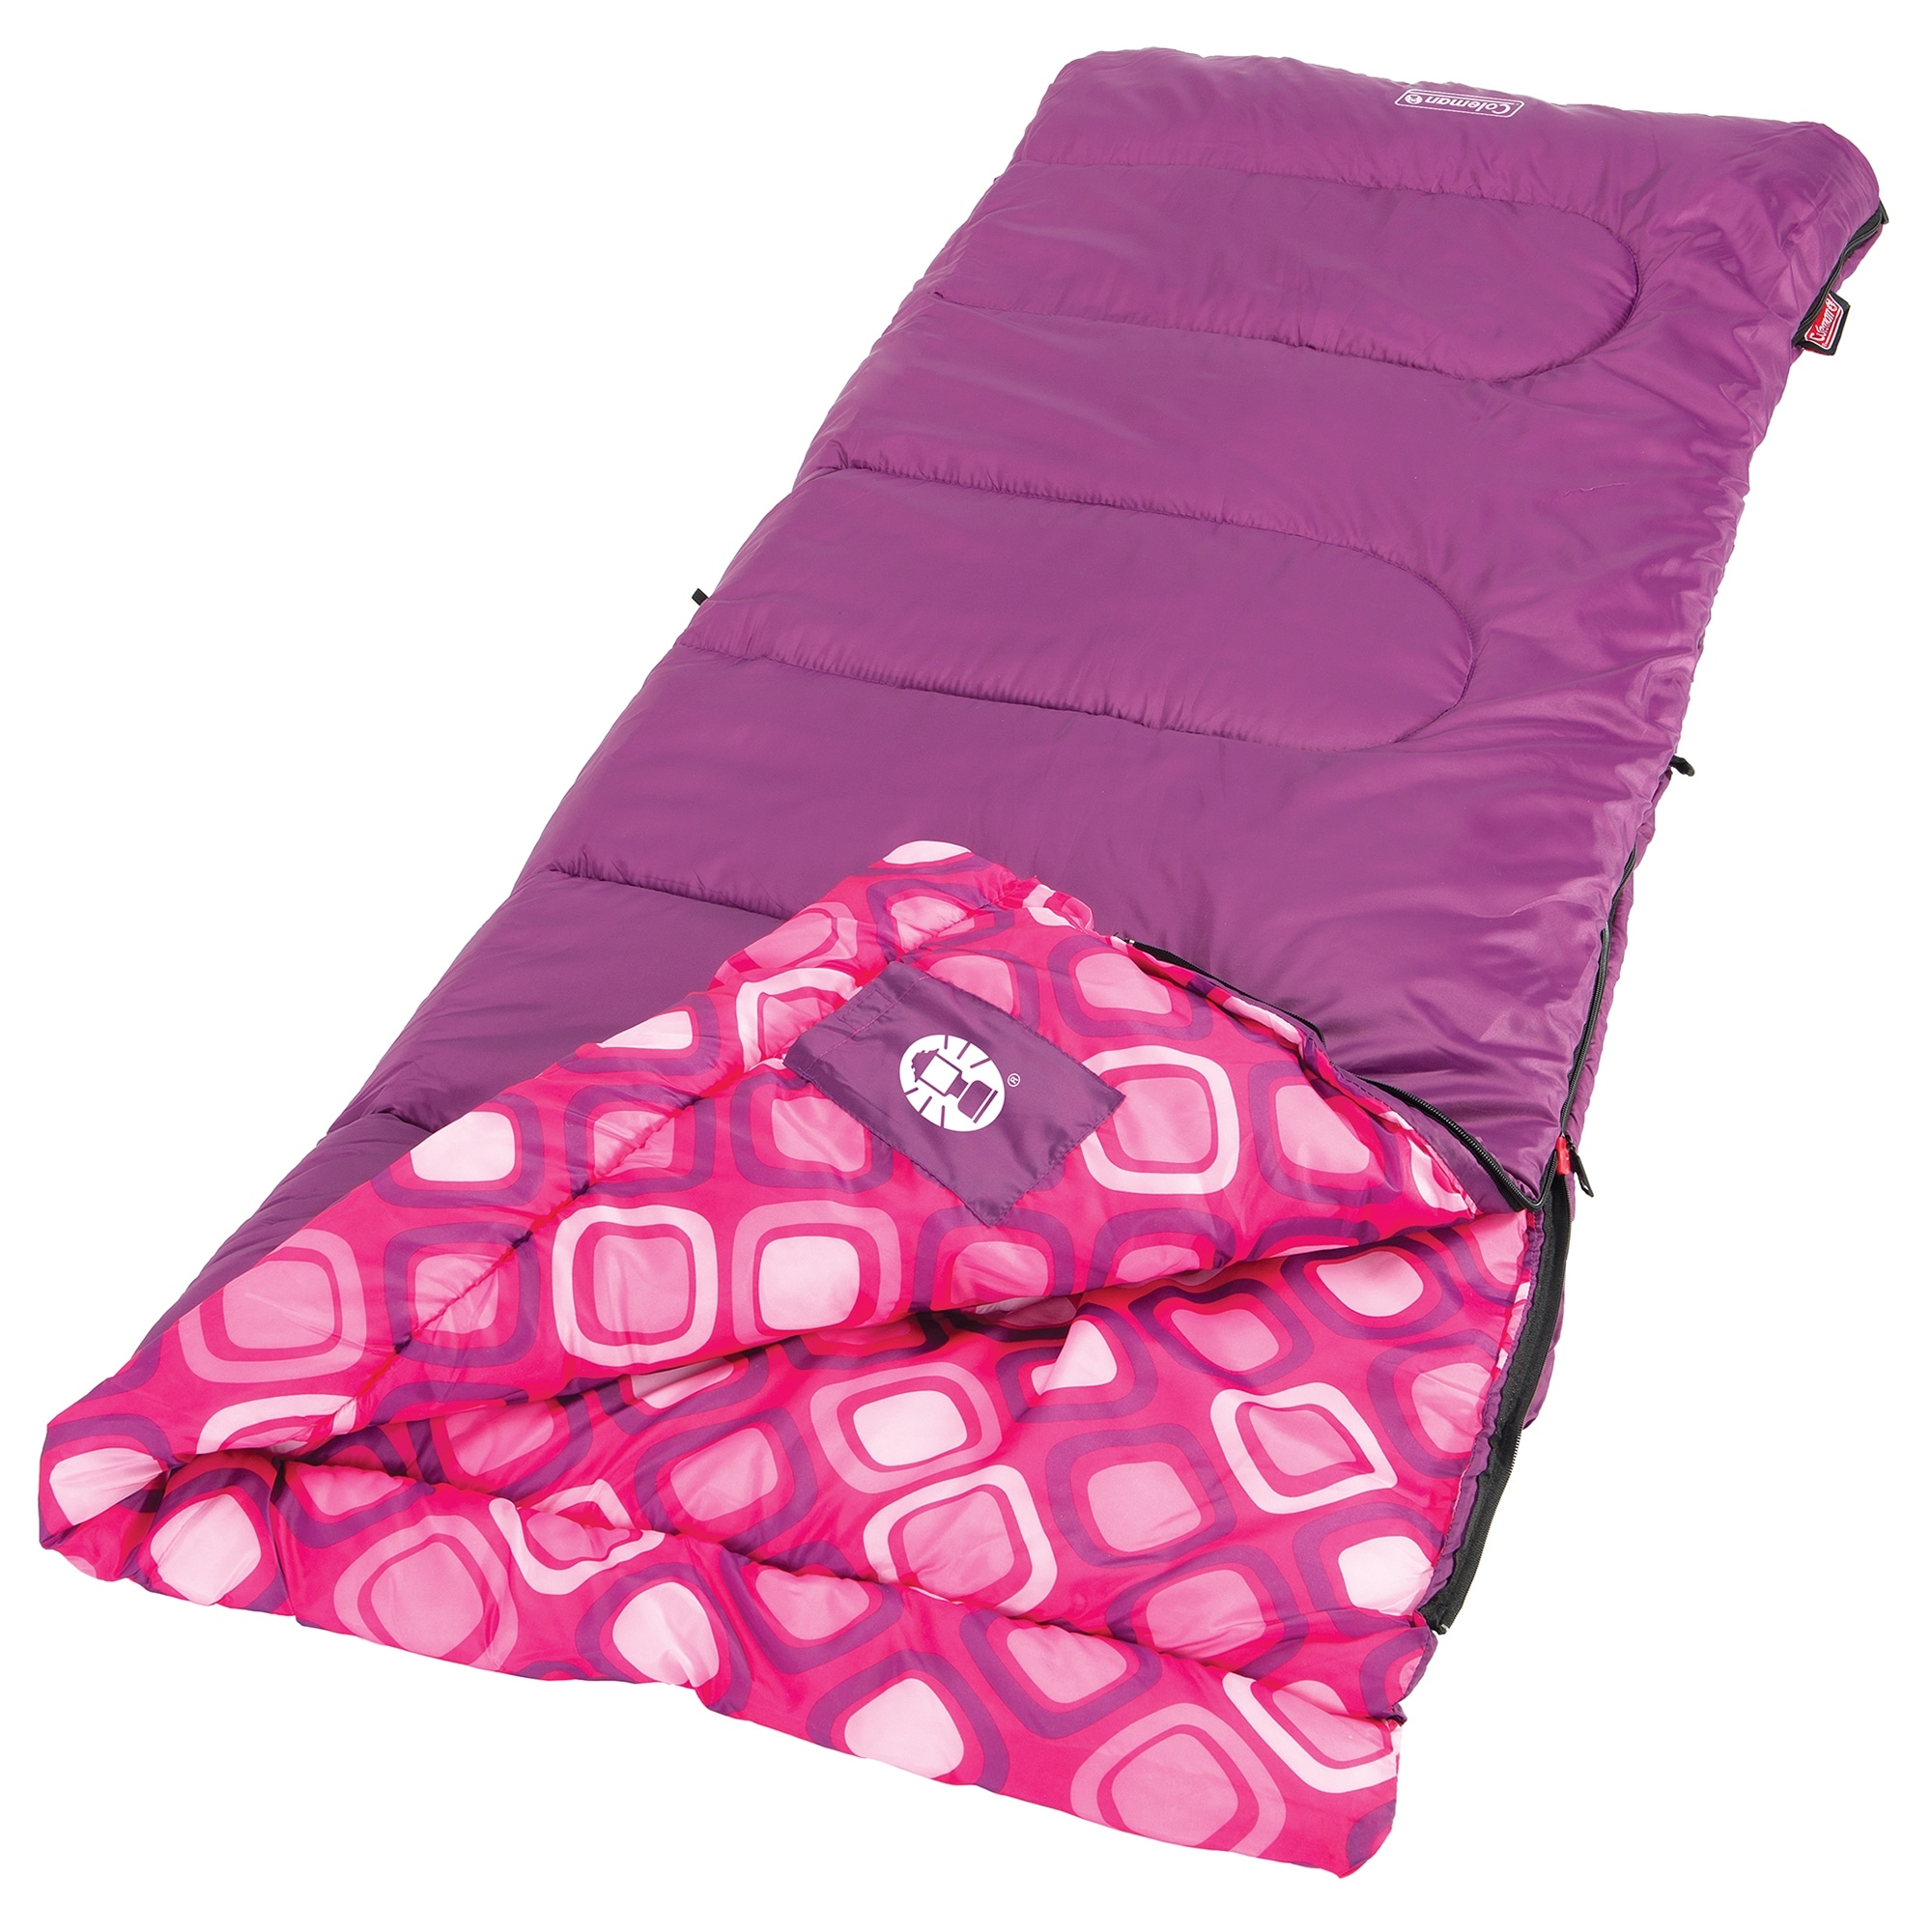 pink sleeping bag for adults